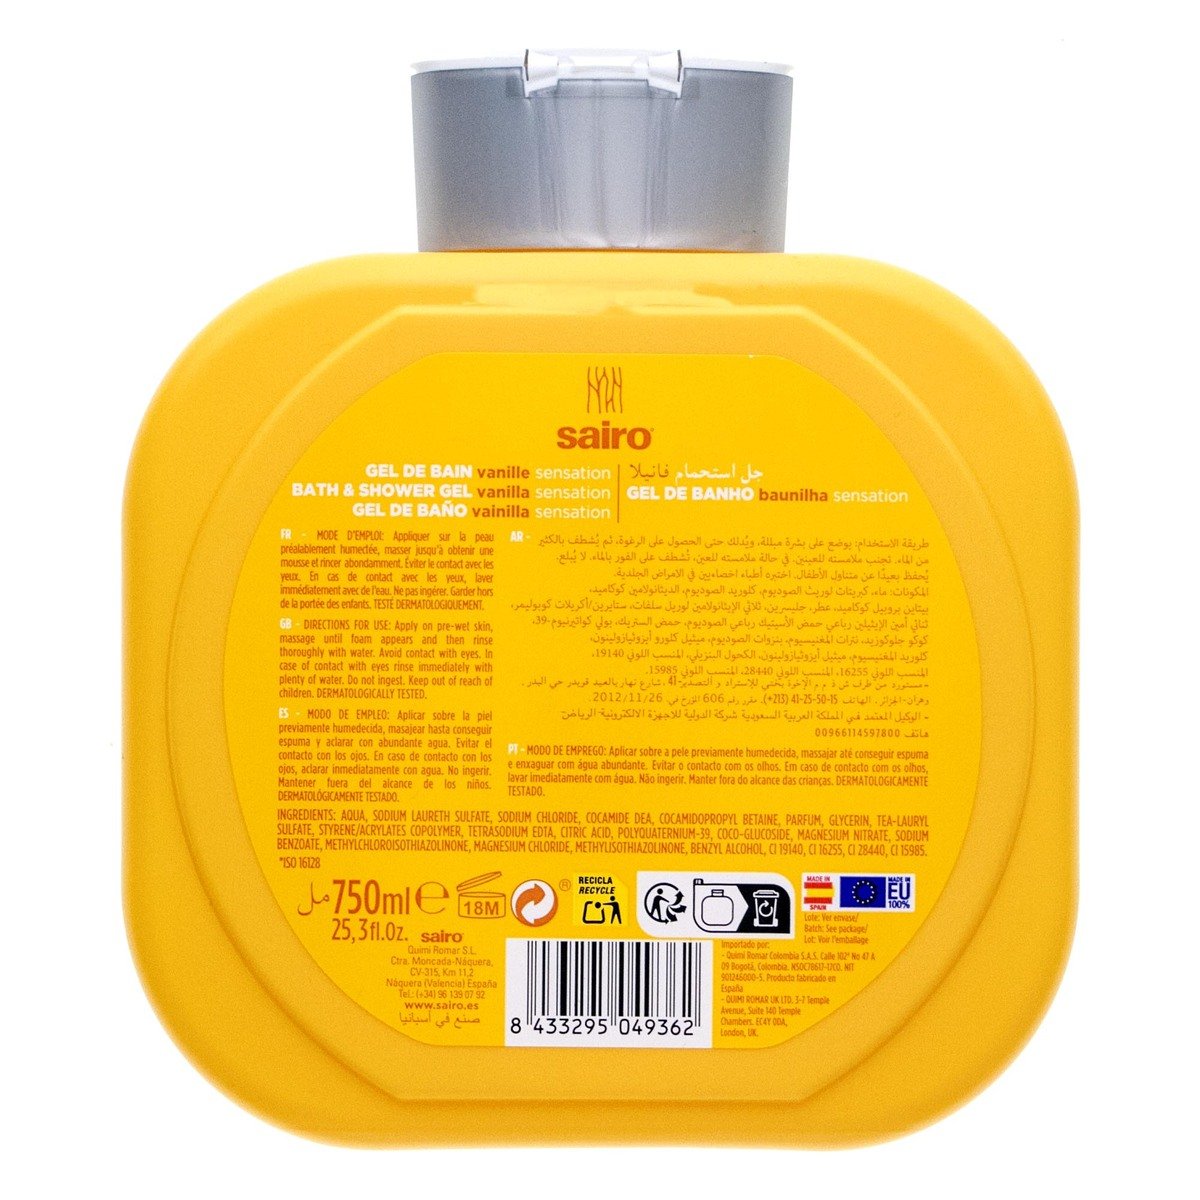 Sairo Vanilla Bath & Shower Gel 750 ml